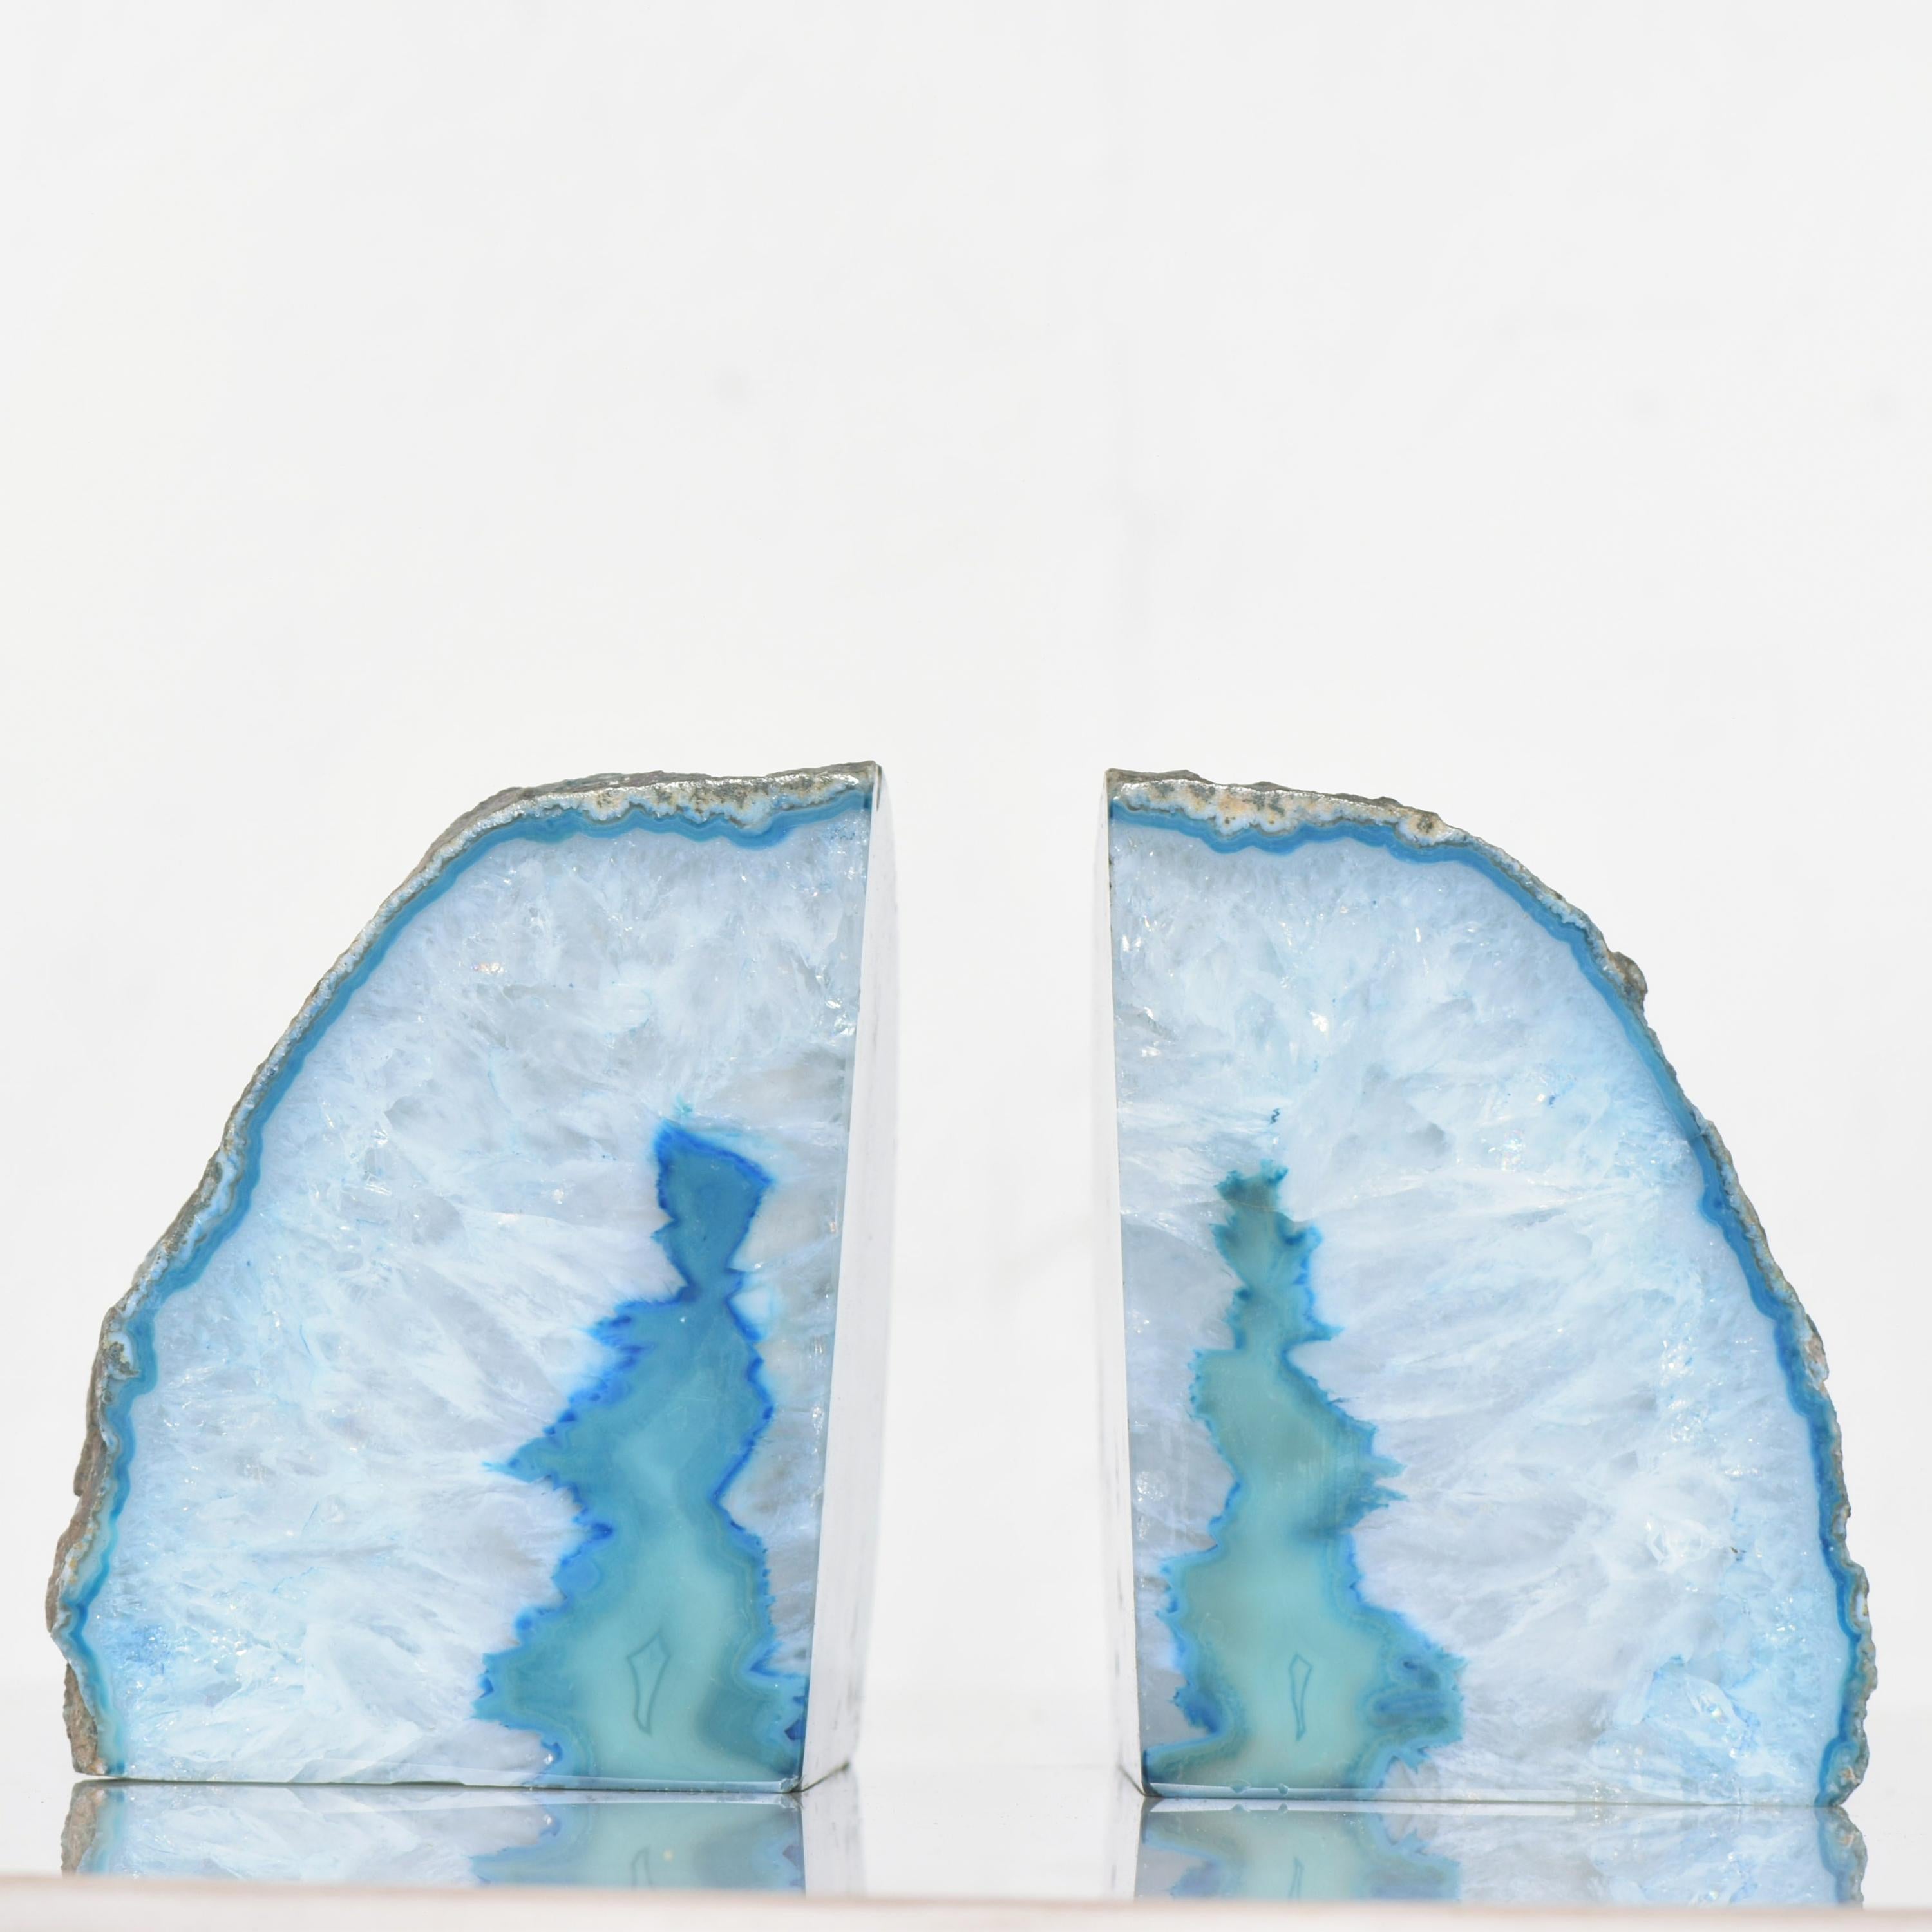 Midcentury pair of organic modern bookends polished floating blue quartz stone 
4 1/2